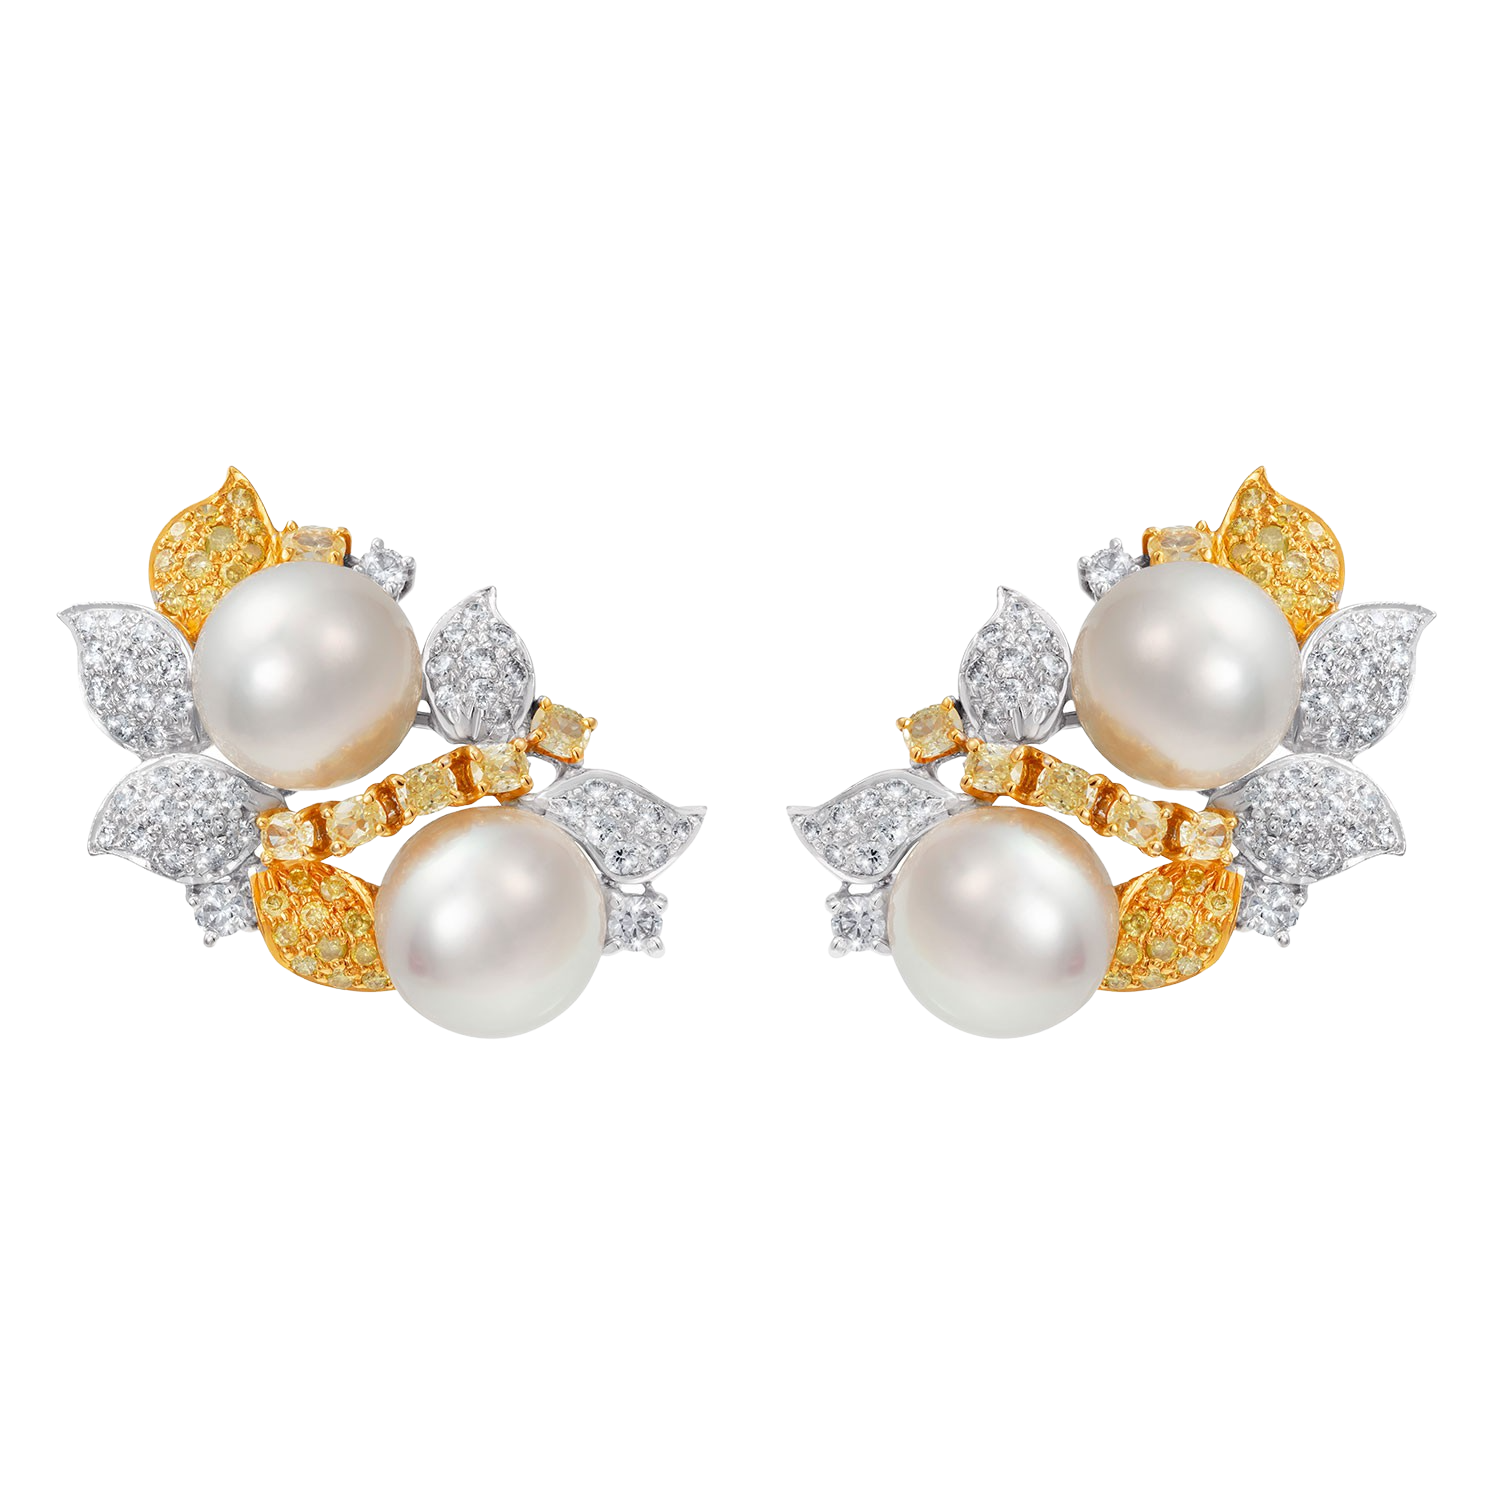 Two-Toned South Sea Pearl and Diamond Earrings